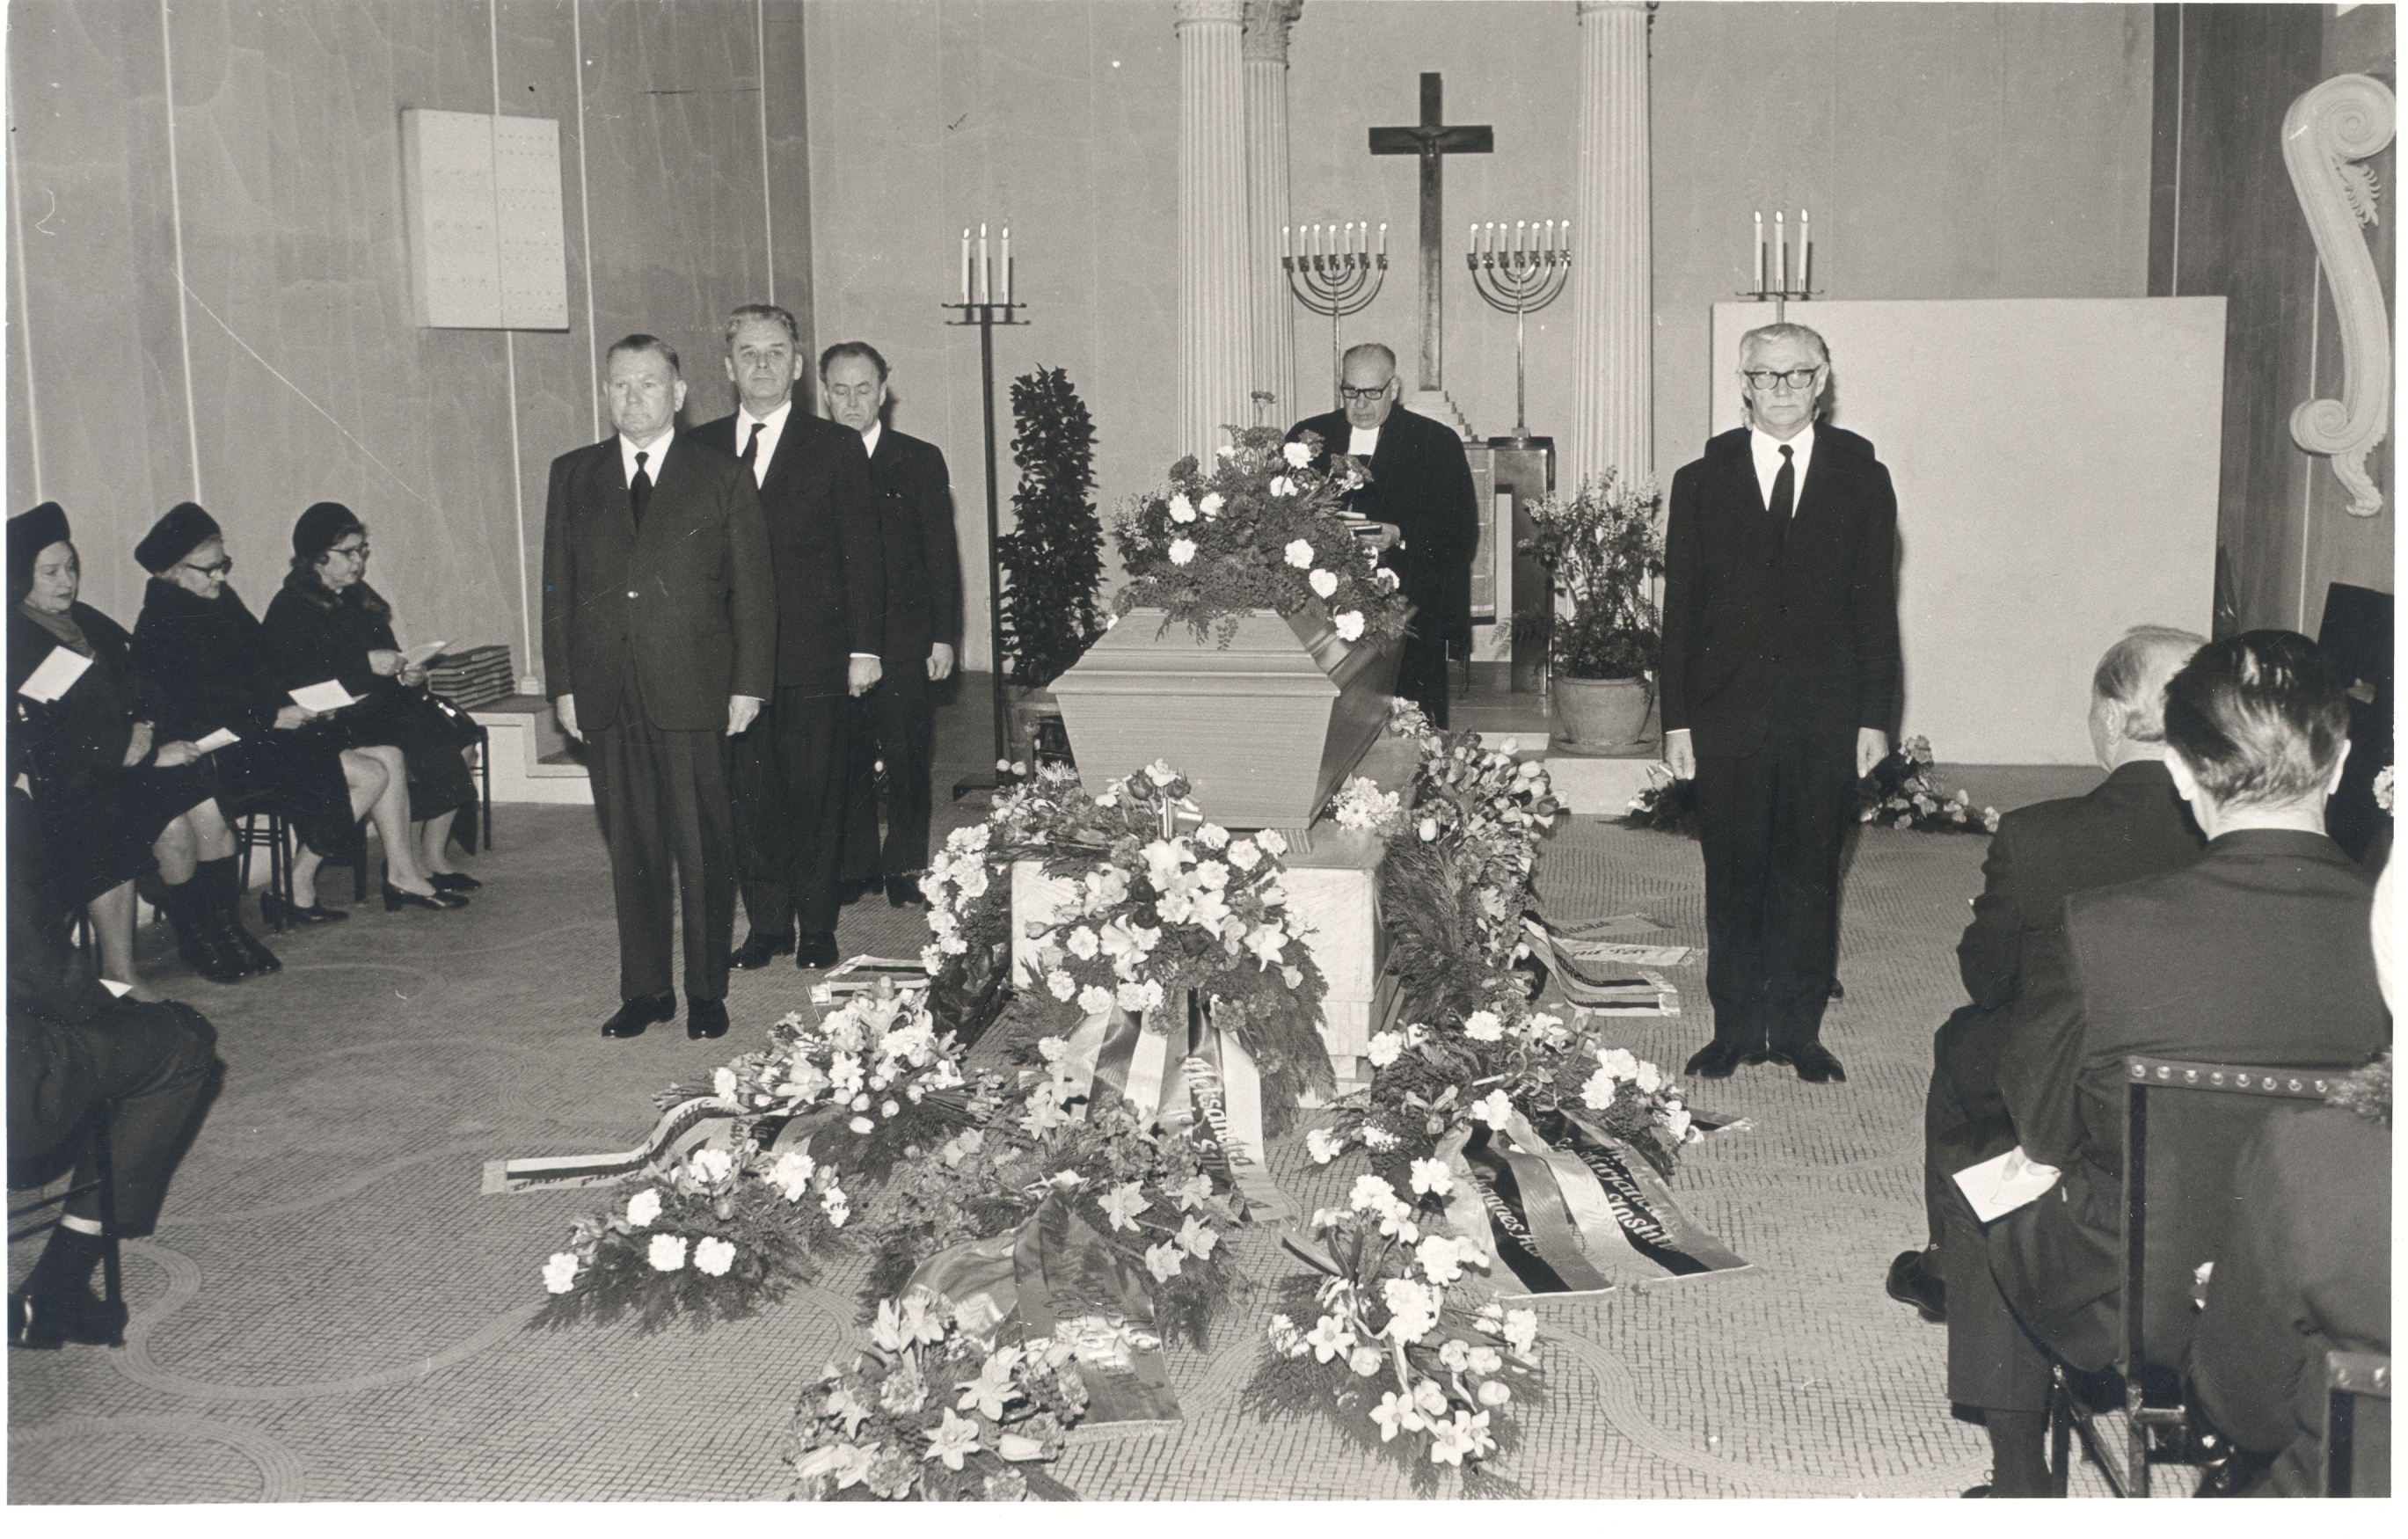 The funeral of John Aaviku